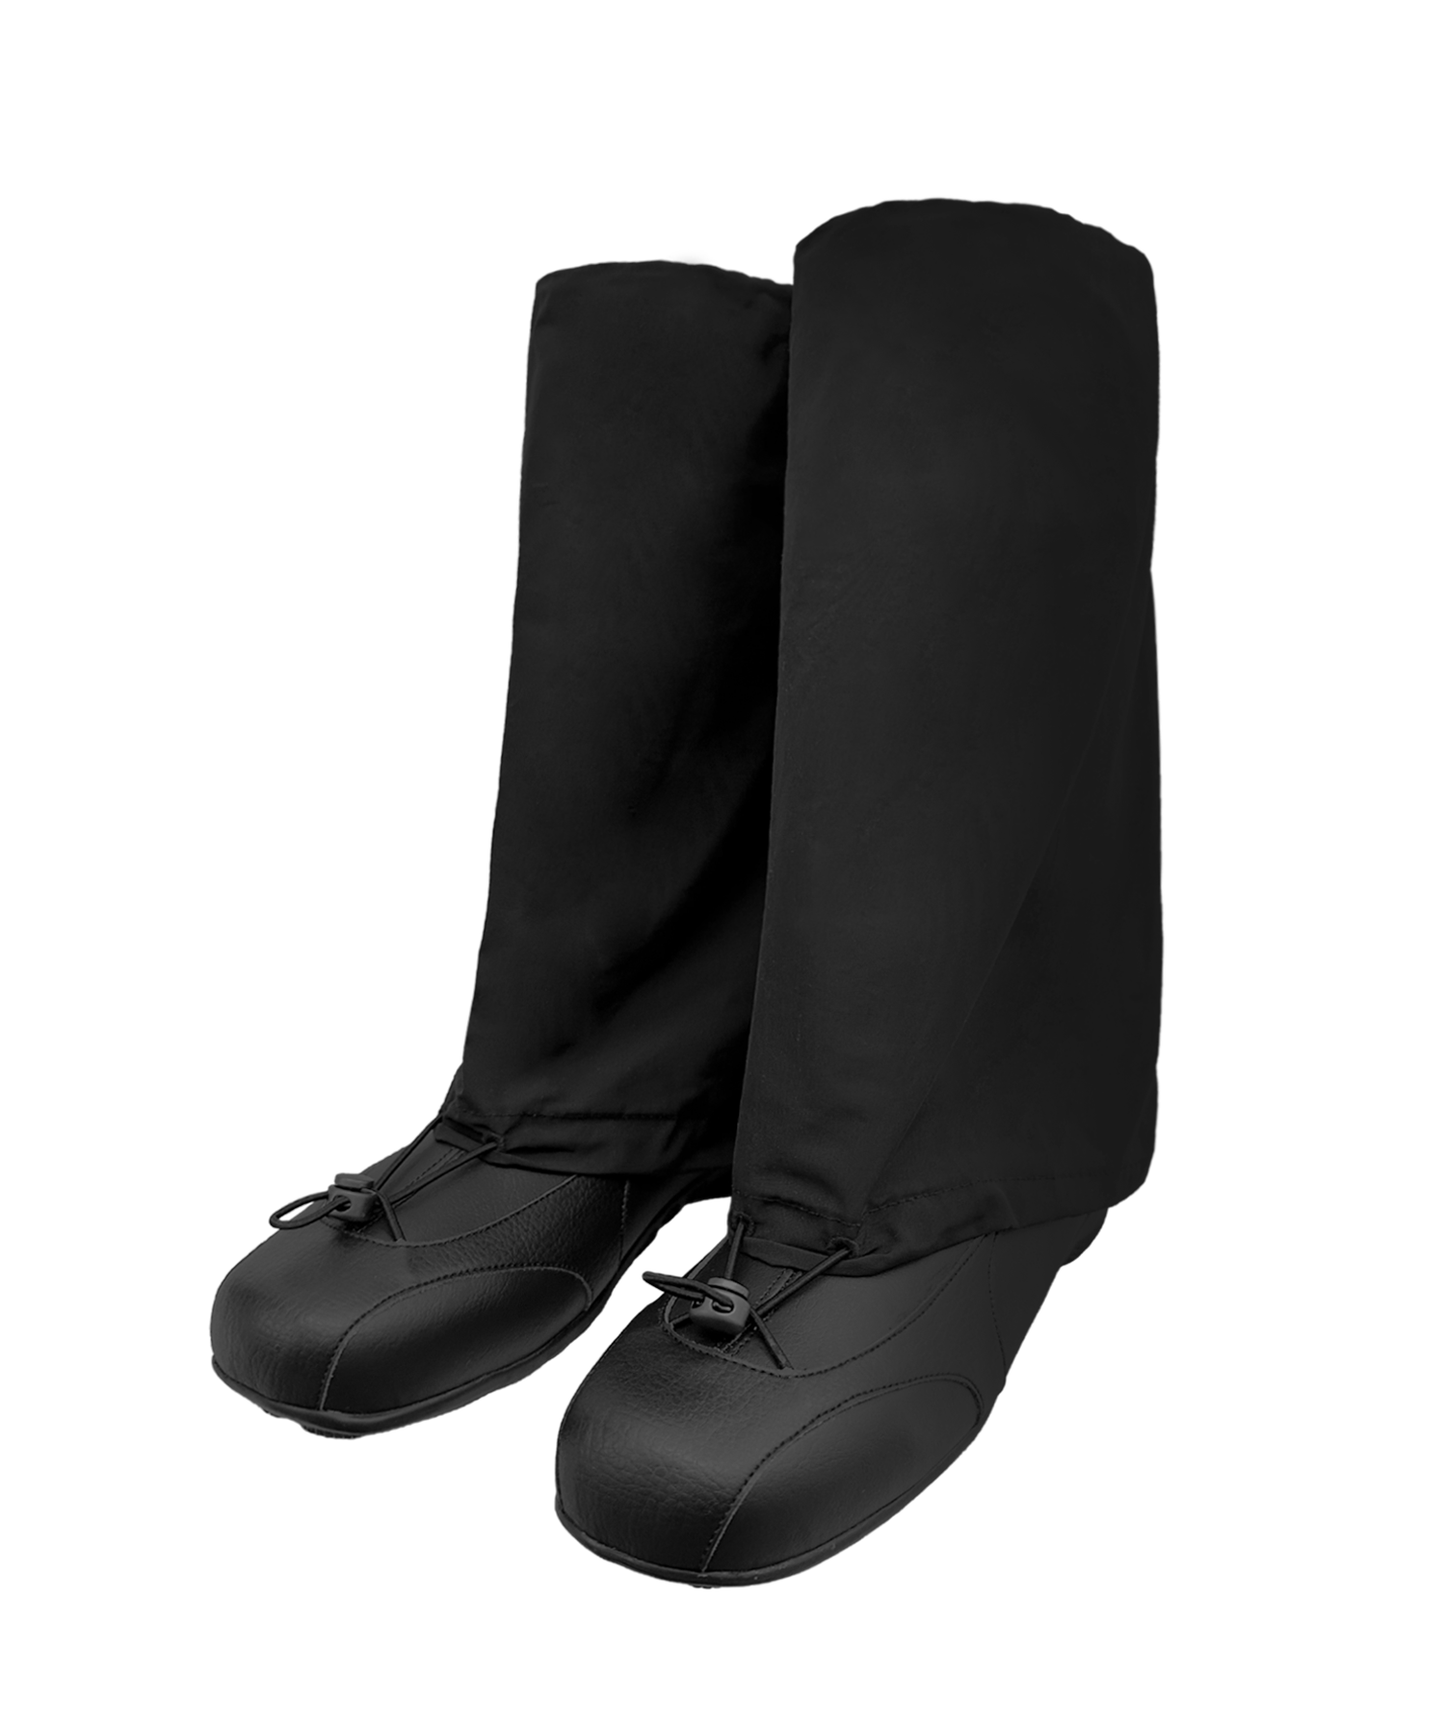 Ojos Nylon folding leather boots